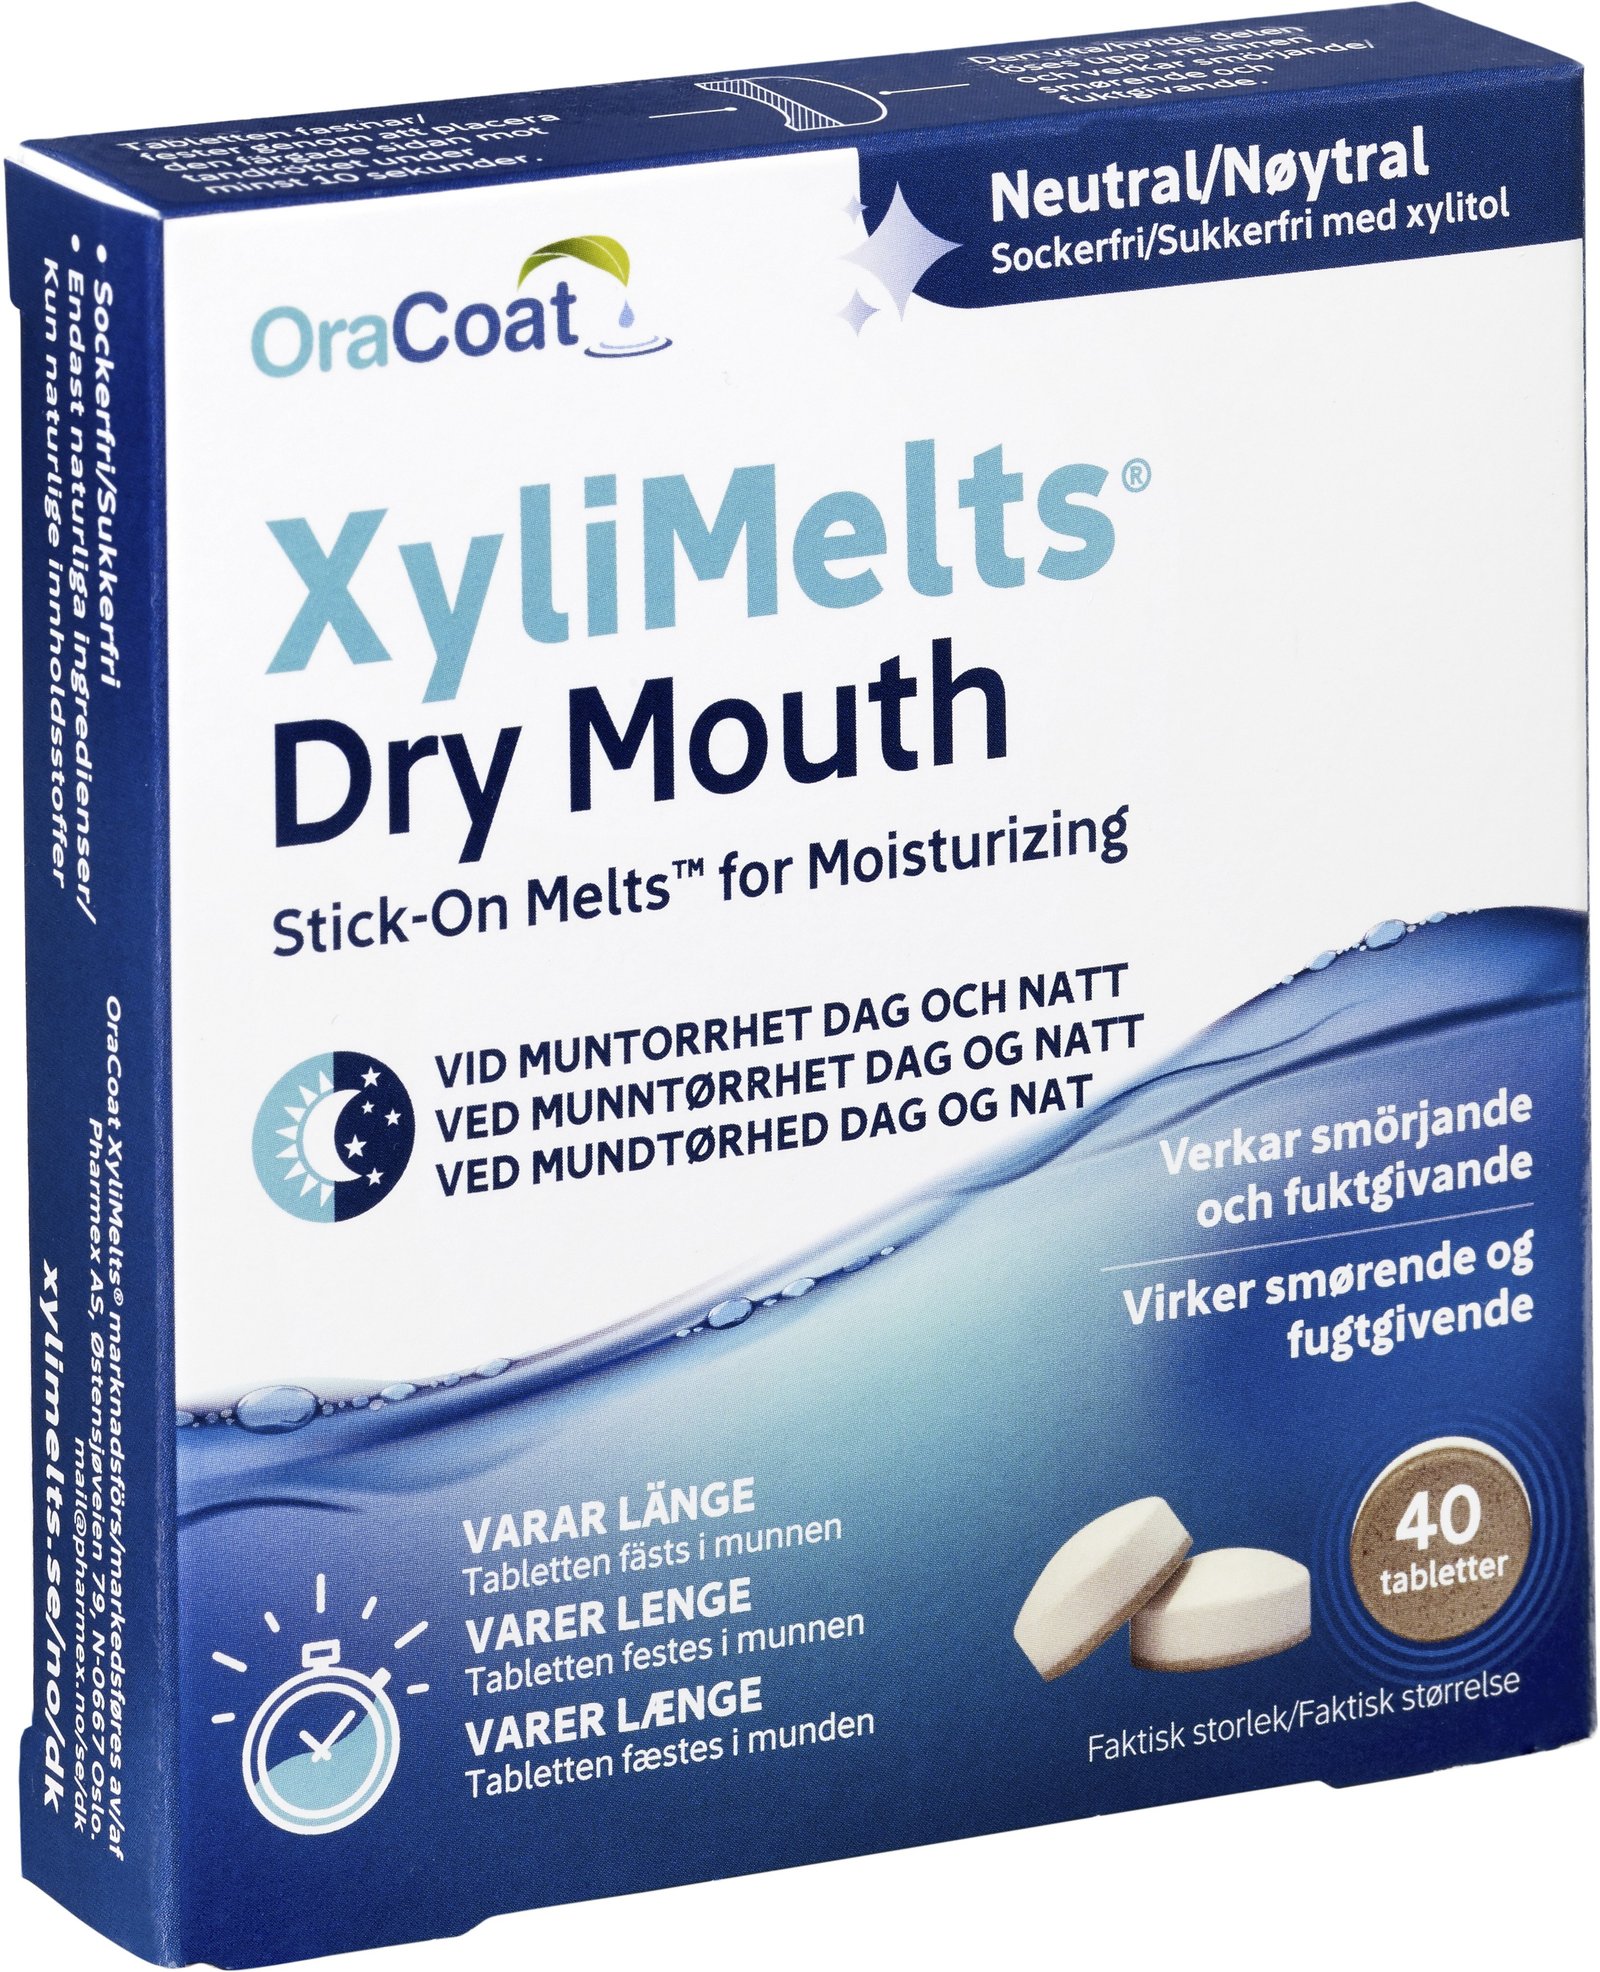 Xylimelts Dry Mouth Neutral Fästtabletter vid muntorrhet 40 st